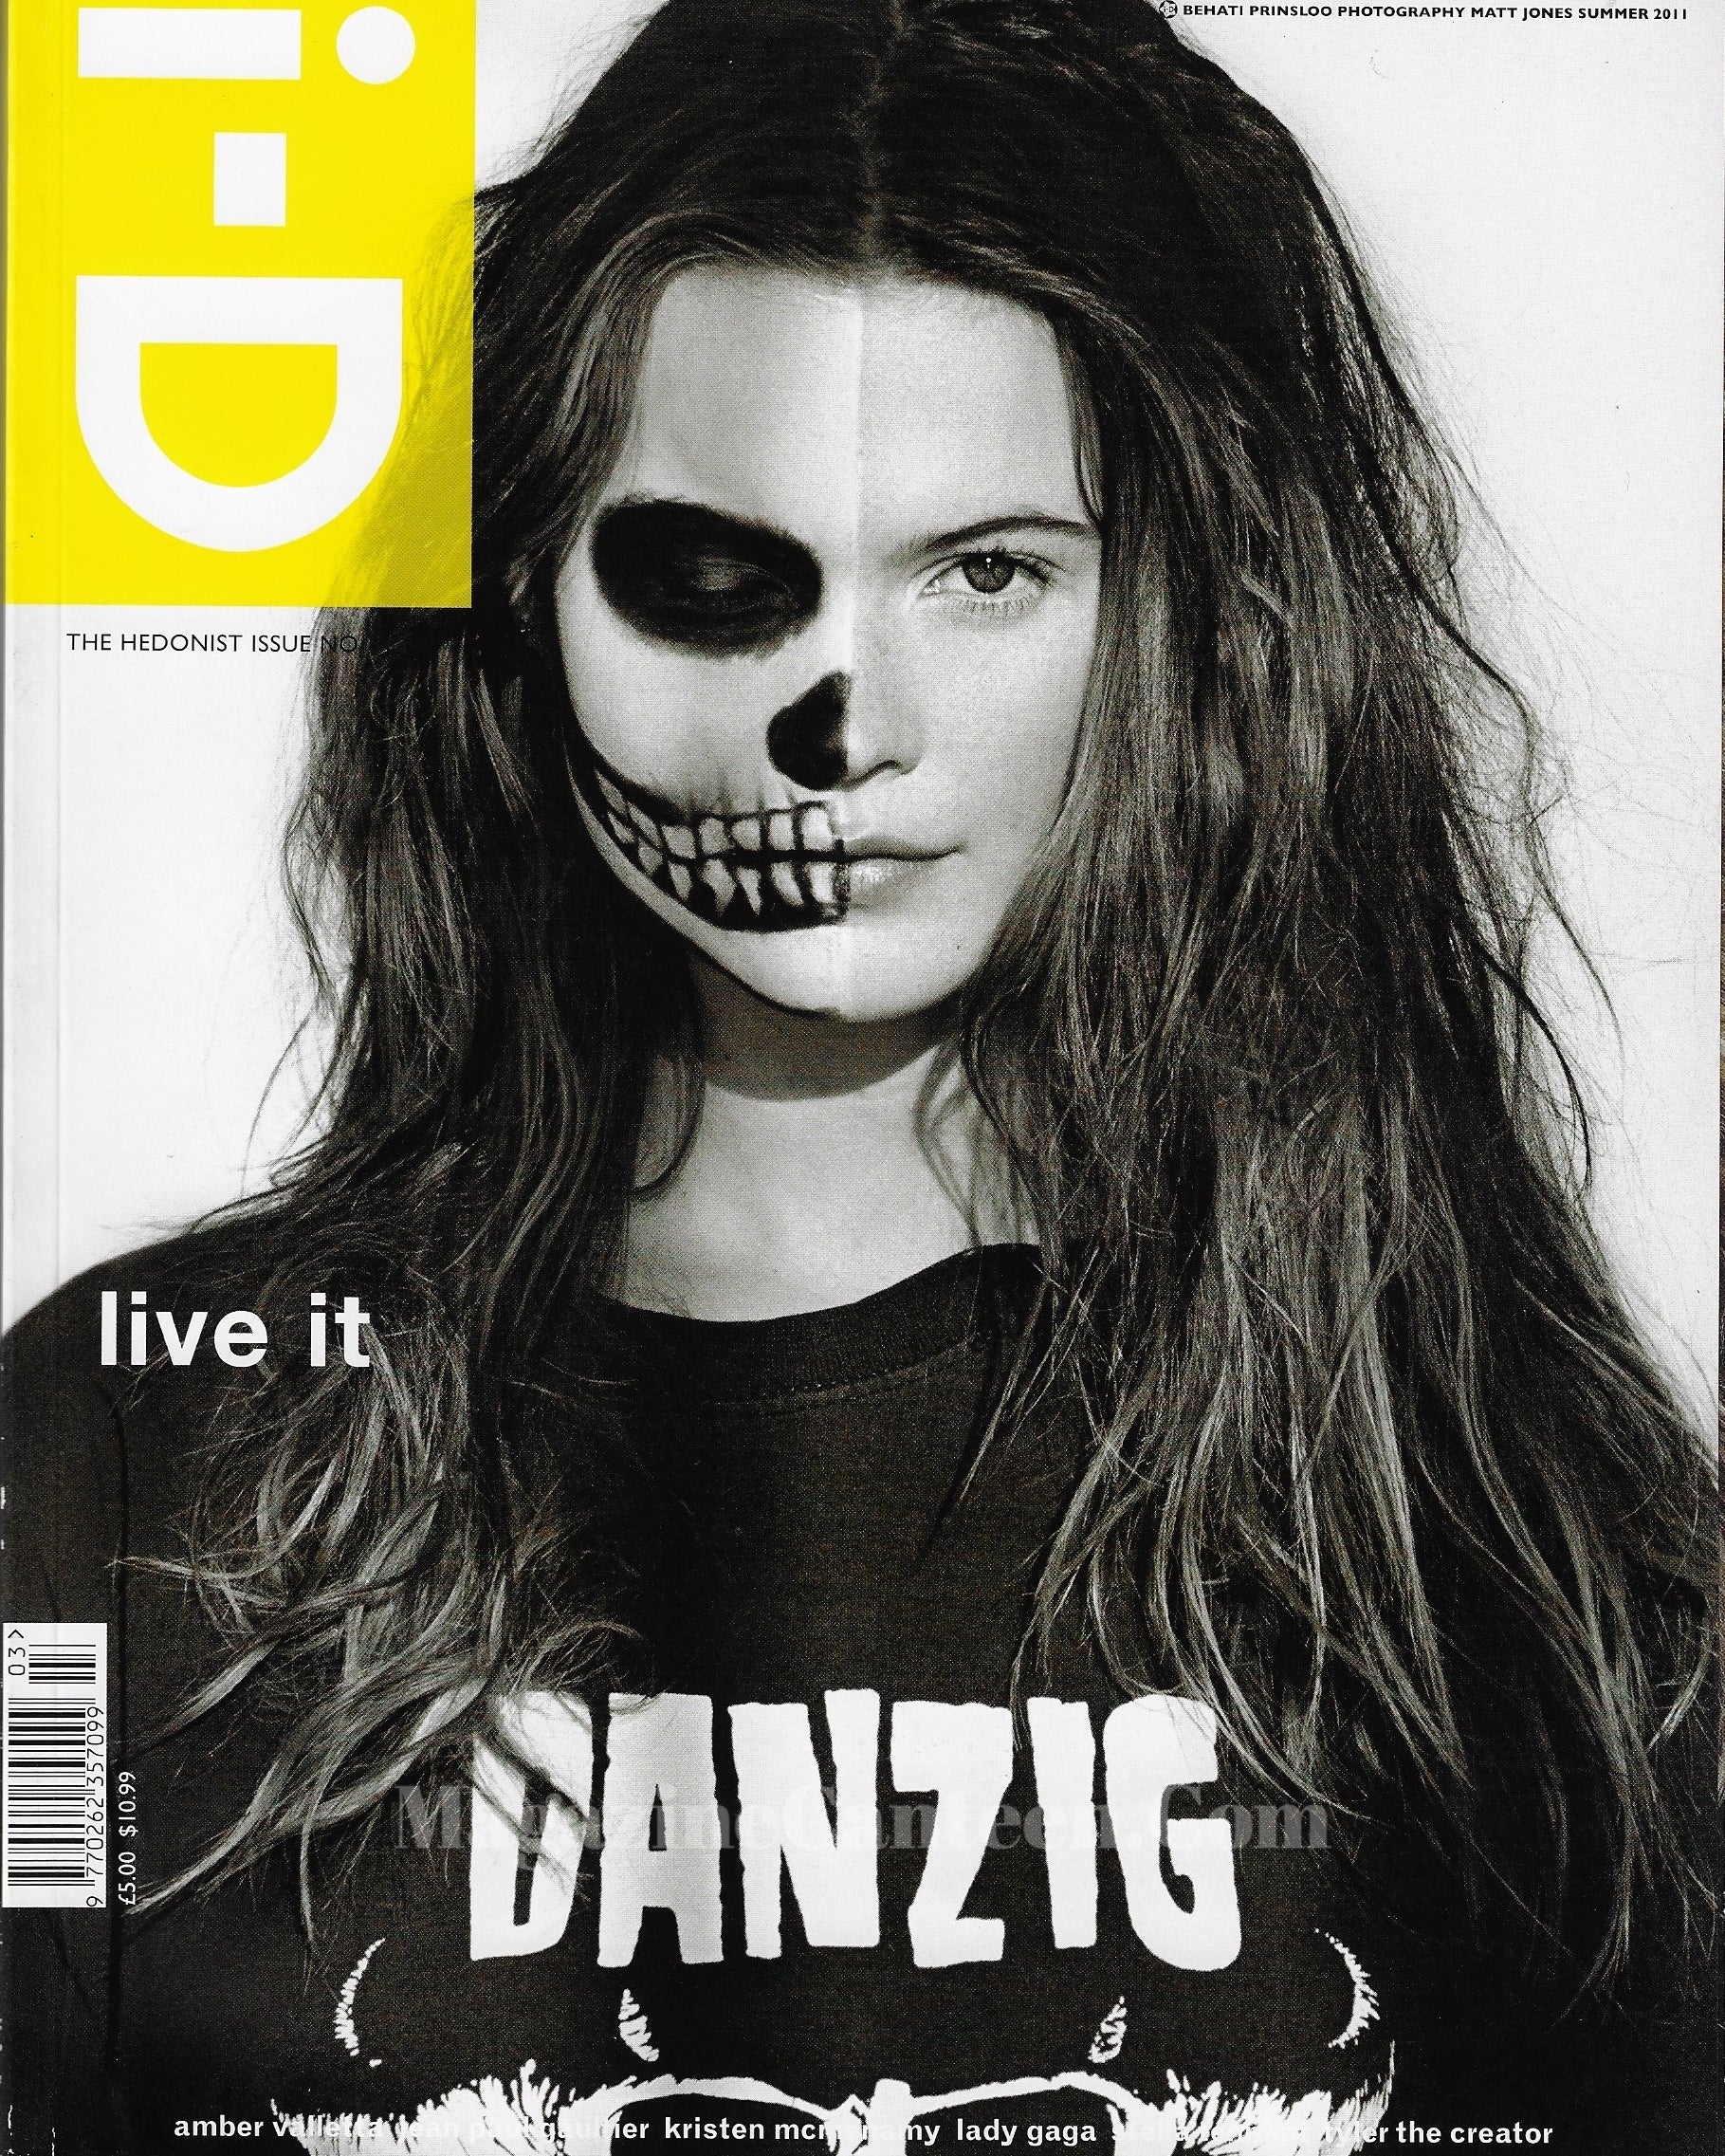 I-D Magazine 313 - Behati Prinsloo 2011